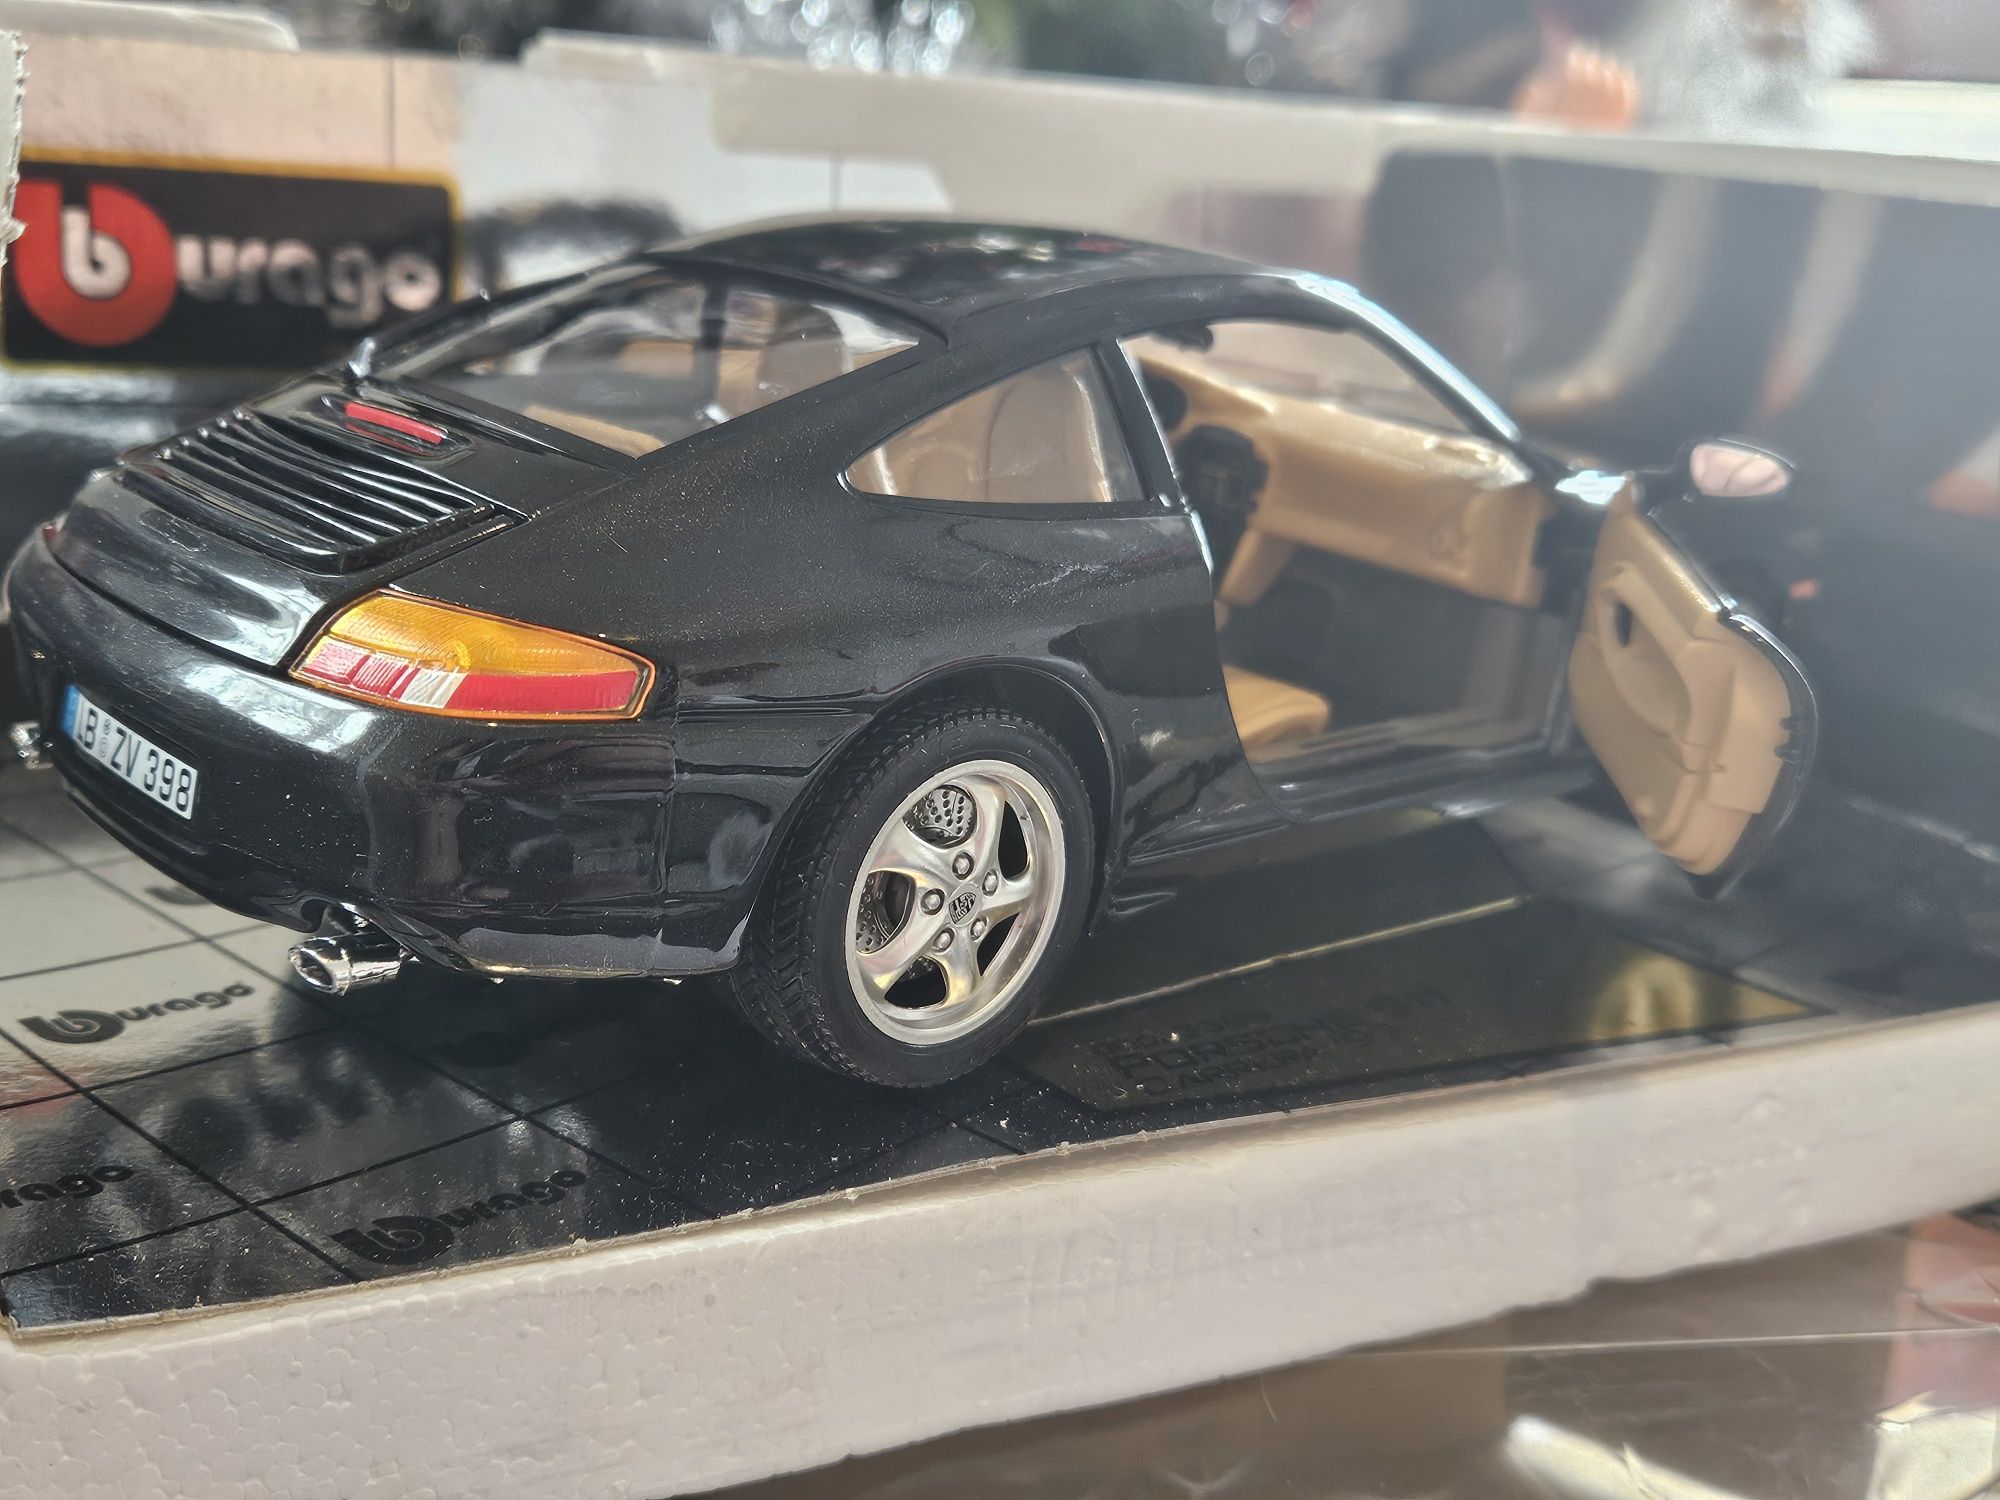 Porsche 911 Carrera 1997